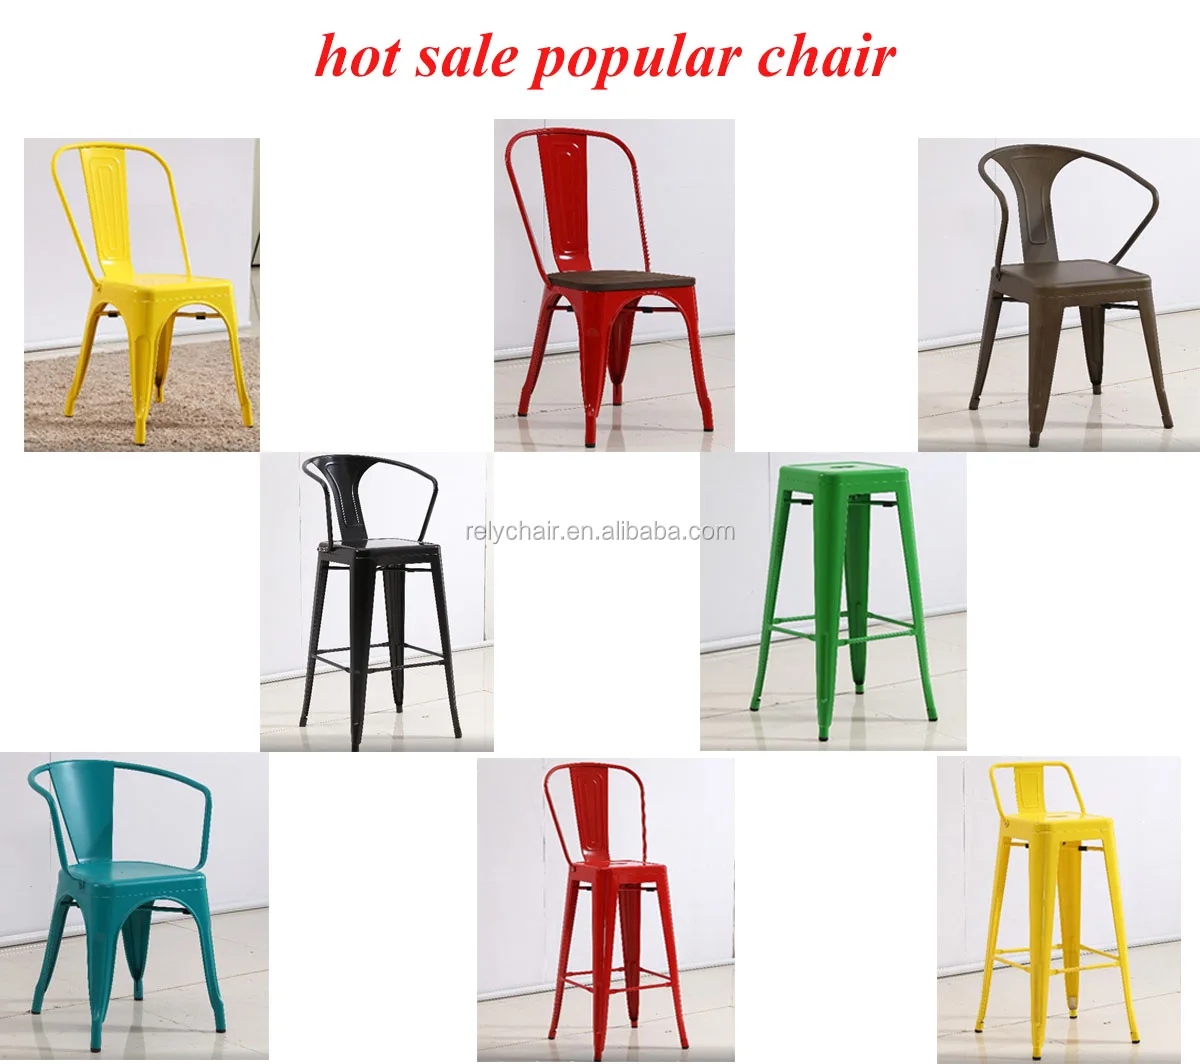 hot sale popular chair.jpg